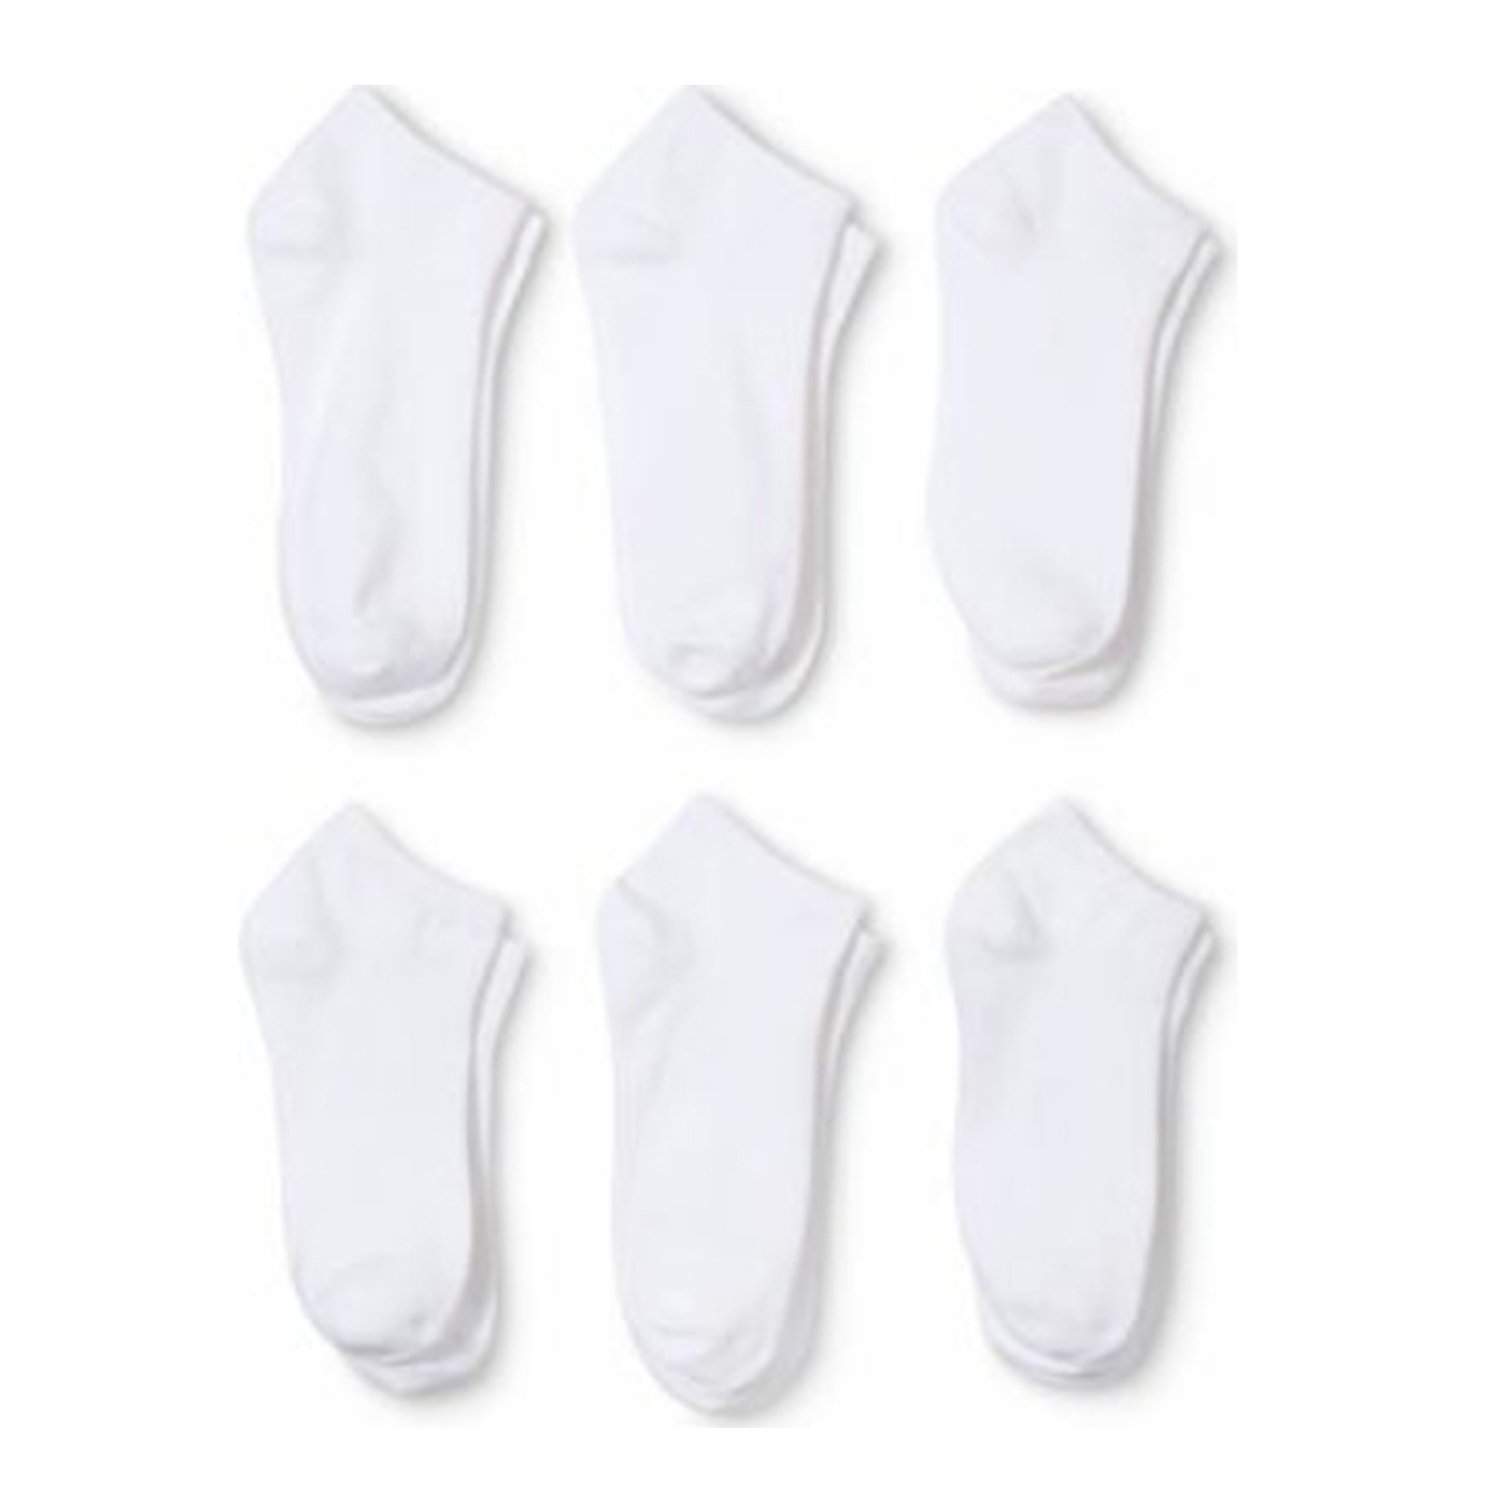 120 Pairs Men's Low Cut No Show Socks 9-11 or 6-8 Black or White - Bulk Wholesale